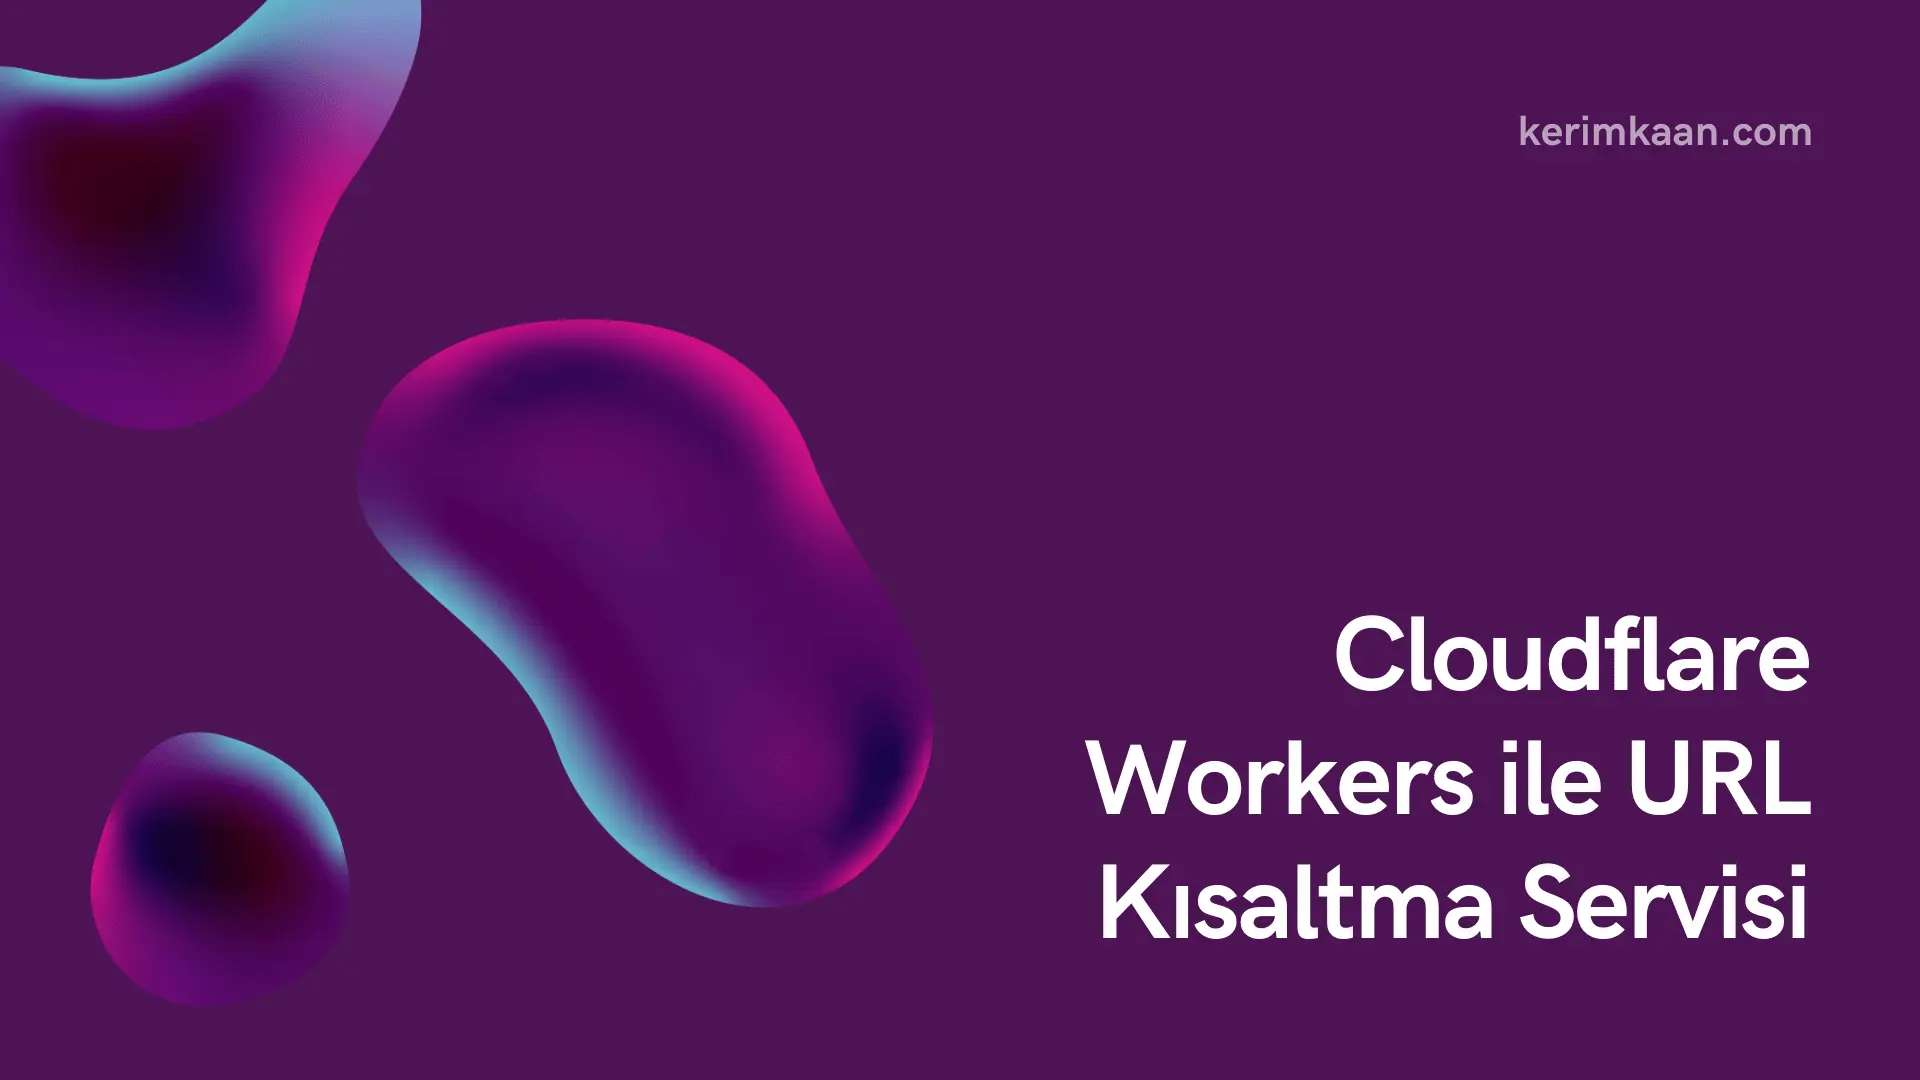 Cloudflare Workers ile URL Kısaltma Servisi